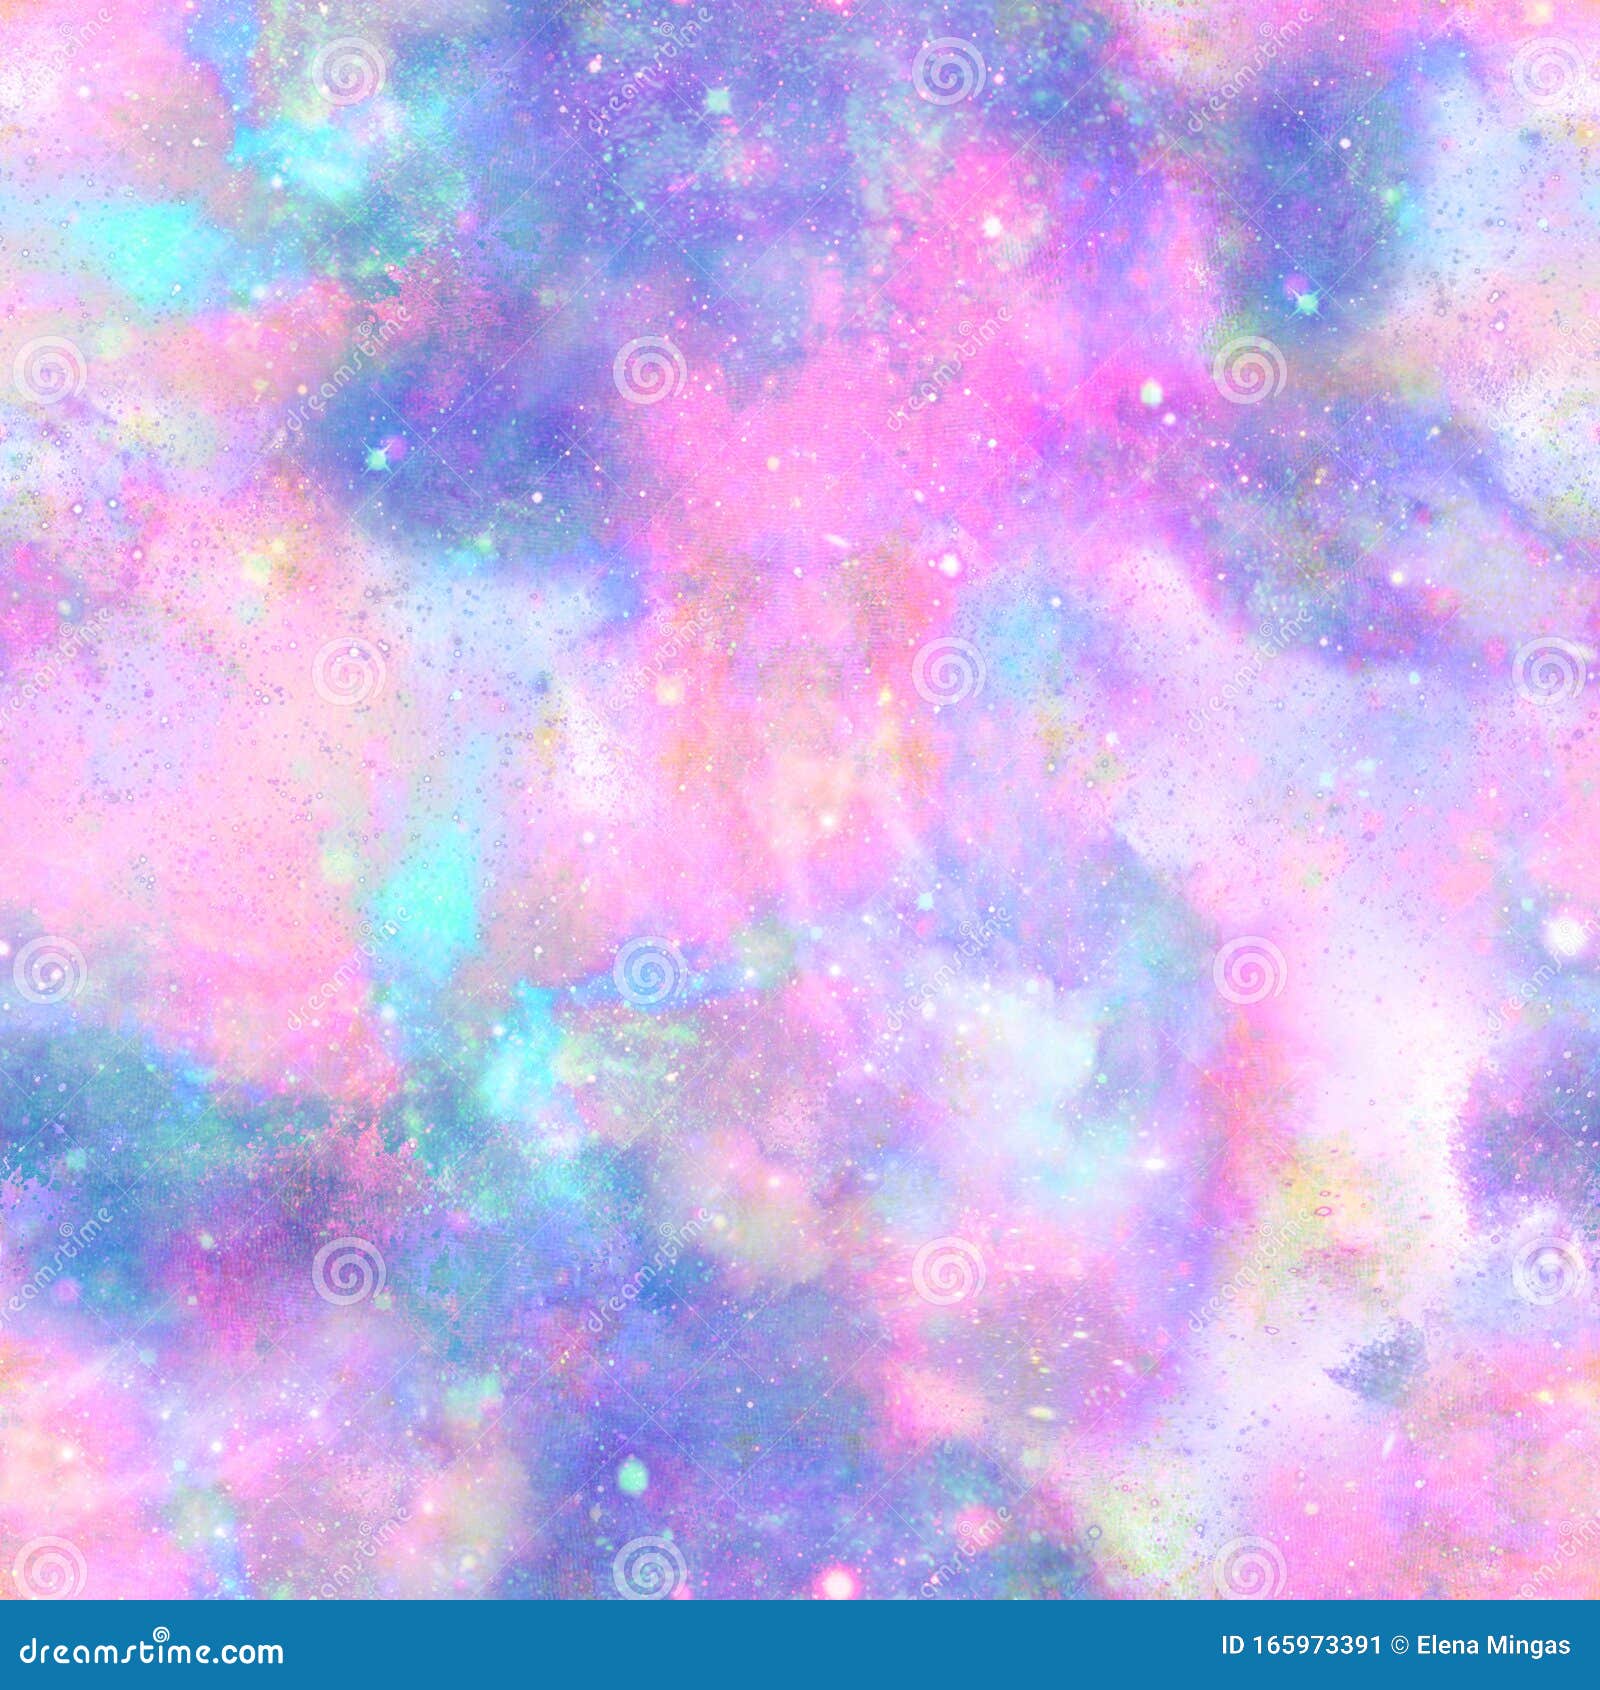 pastel night galaxy explosion print